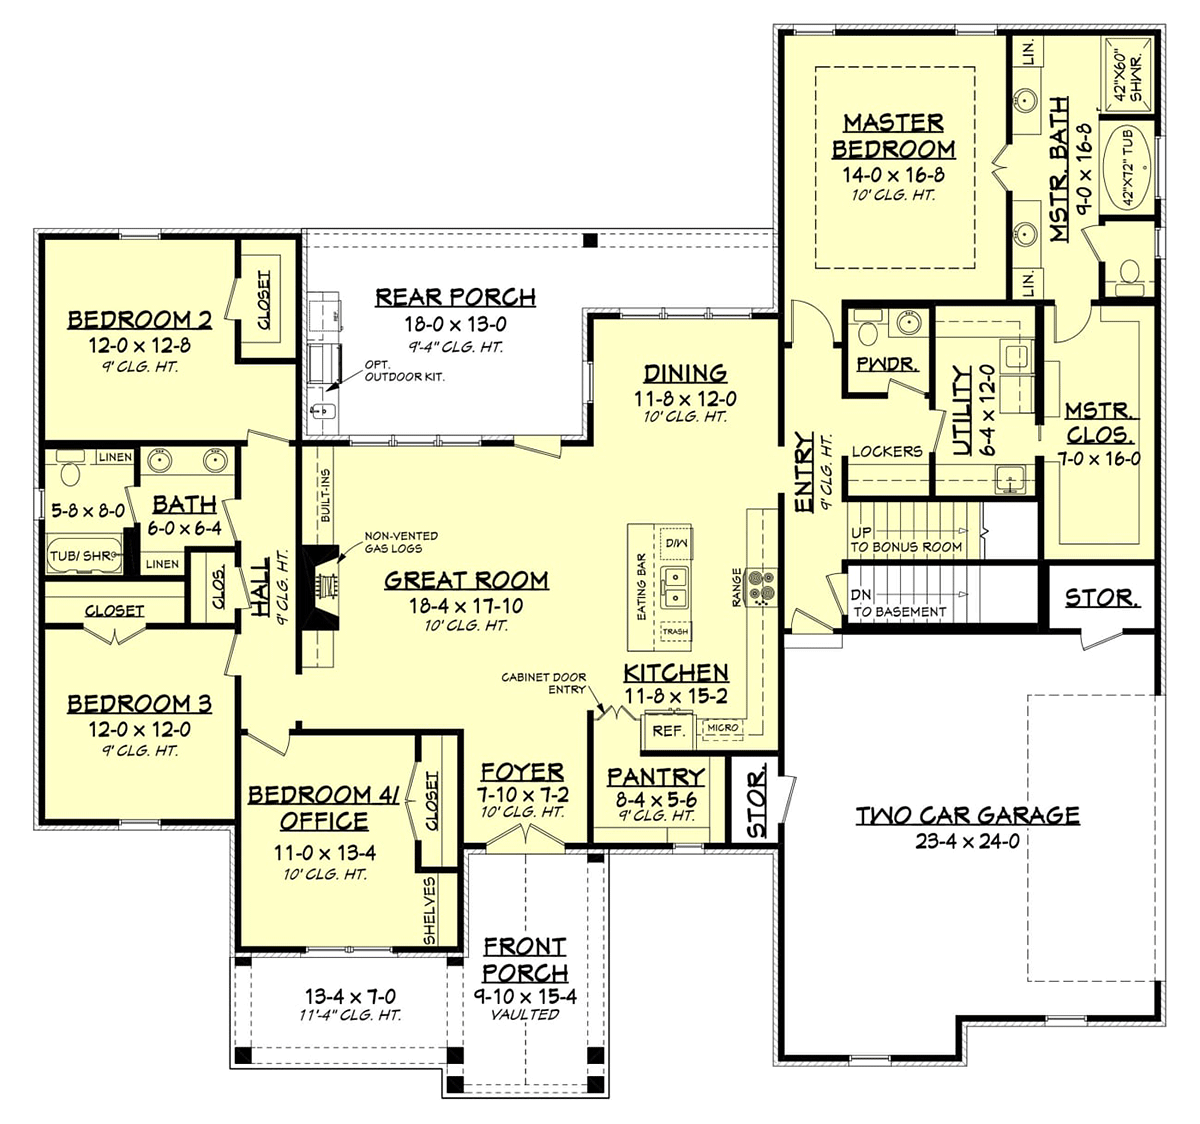 House Plan 51981 Alternate Level One